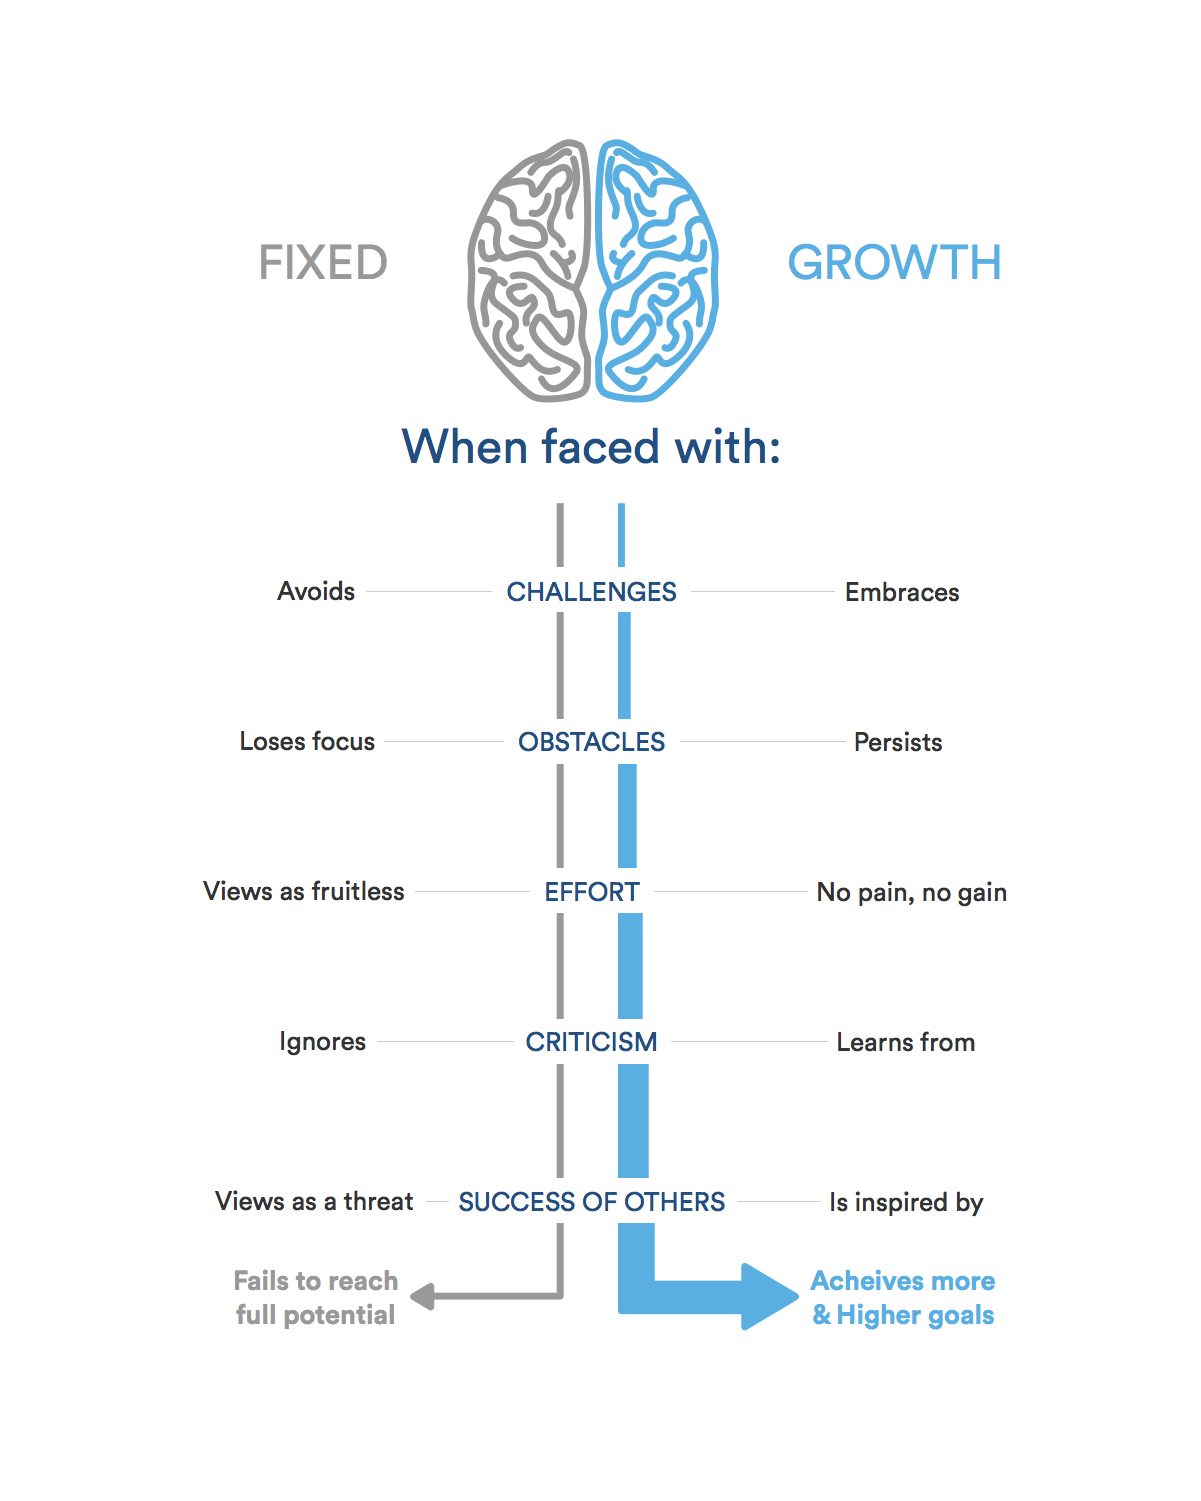 An illustration of the Growth Mindset framework